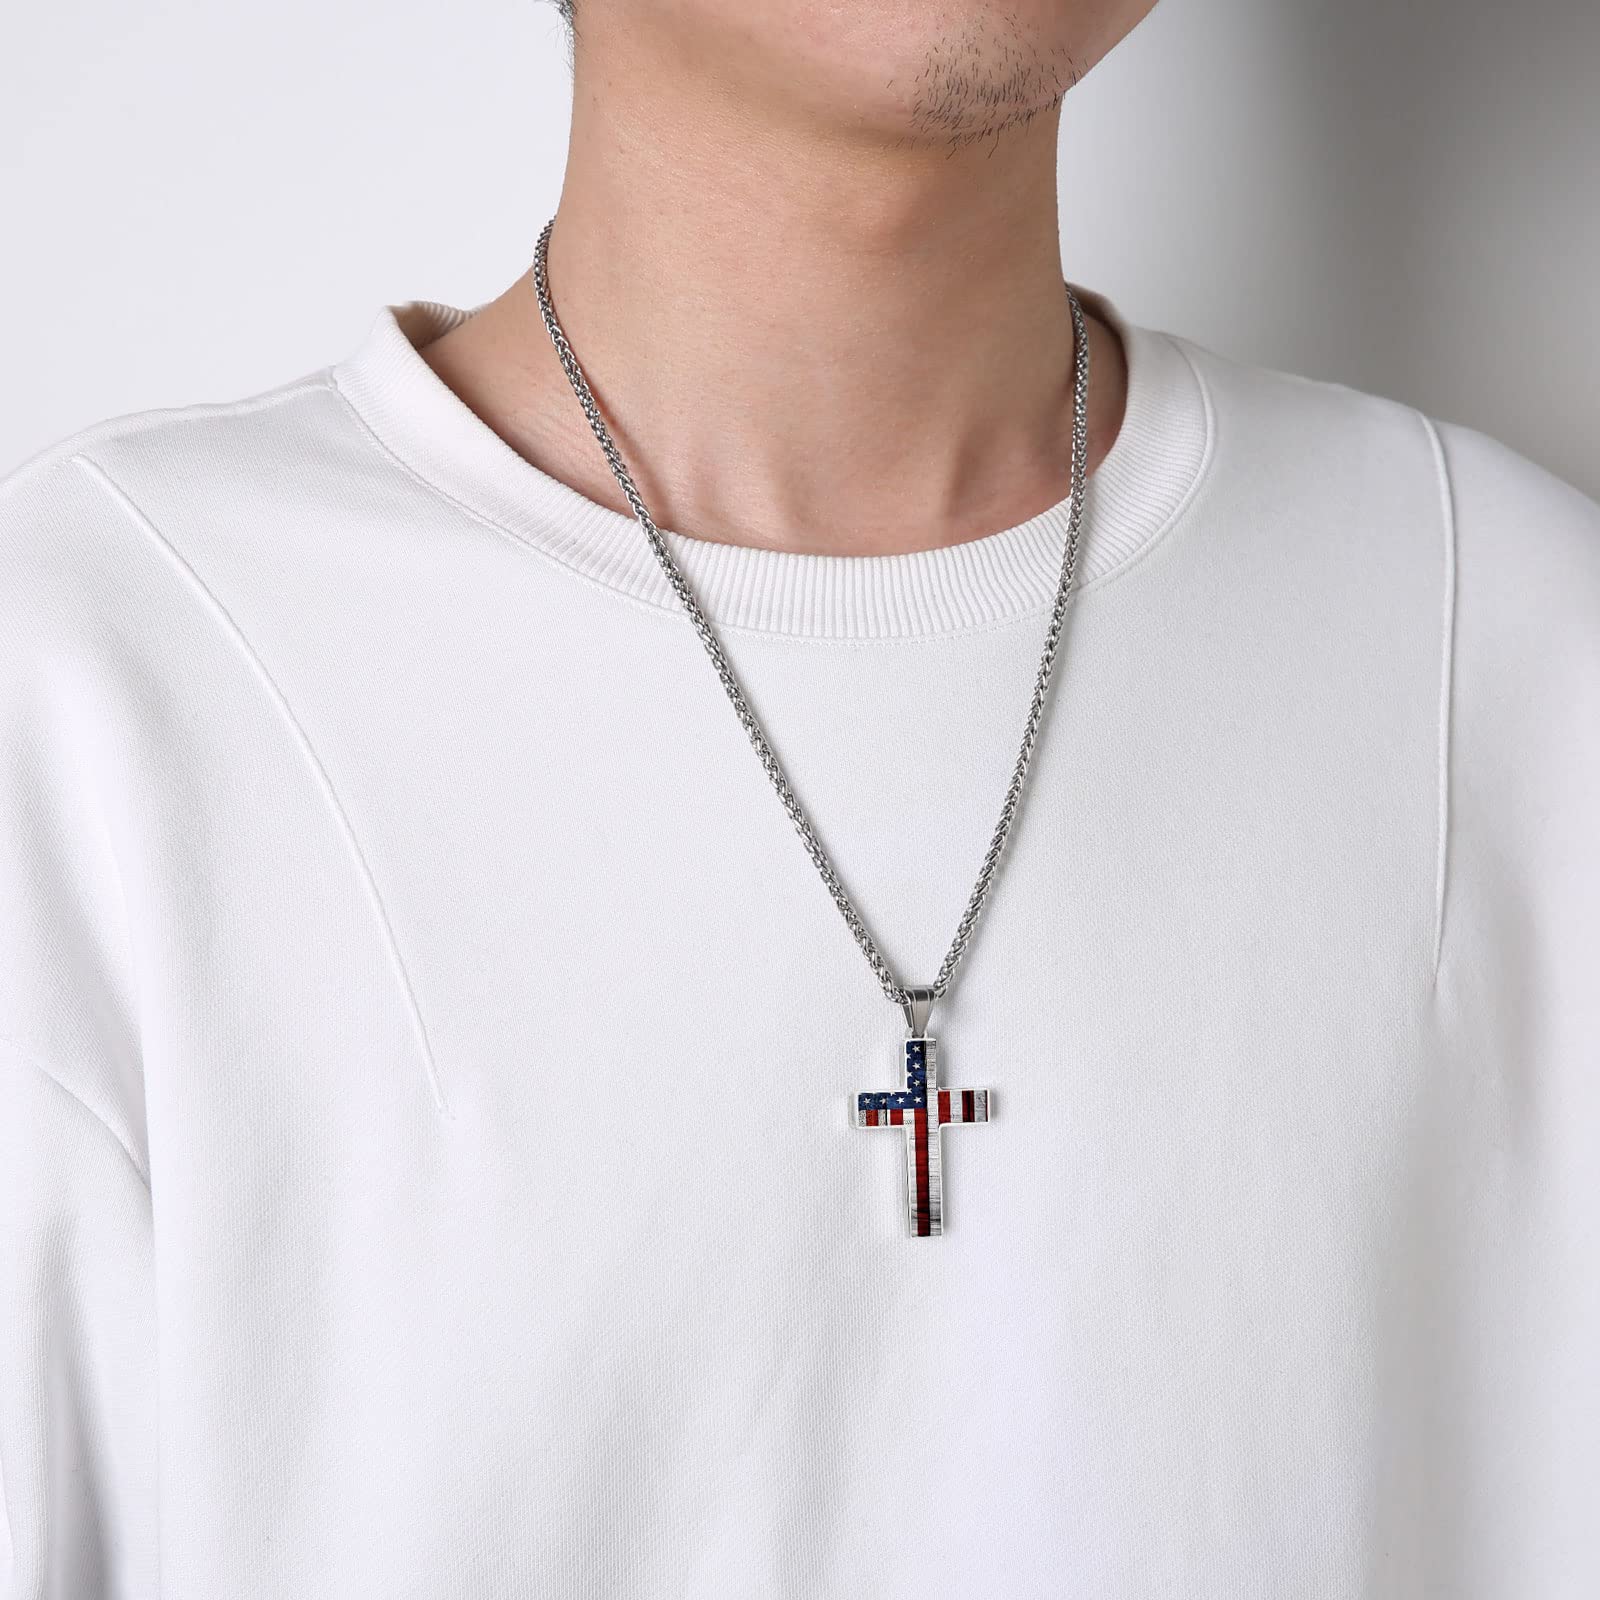 JUHIOPOI Cross Pendant Necklace For Mens Women Jewelry Religious Pendant Chain Necklace